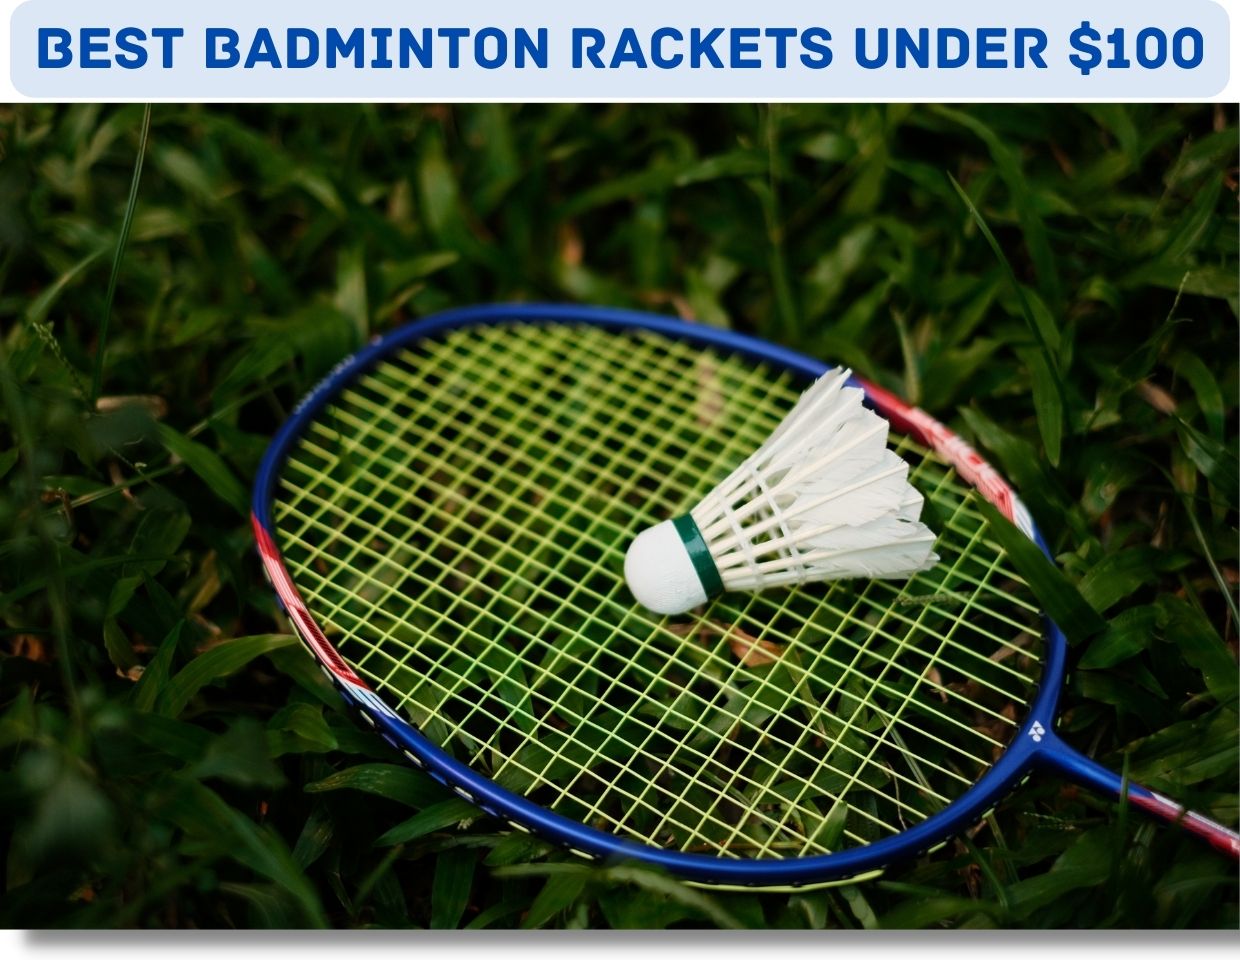 Best Badminton Rackets Under $100